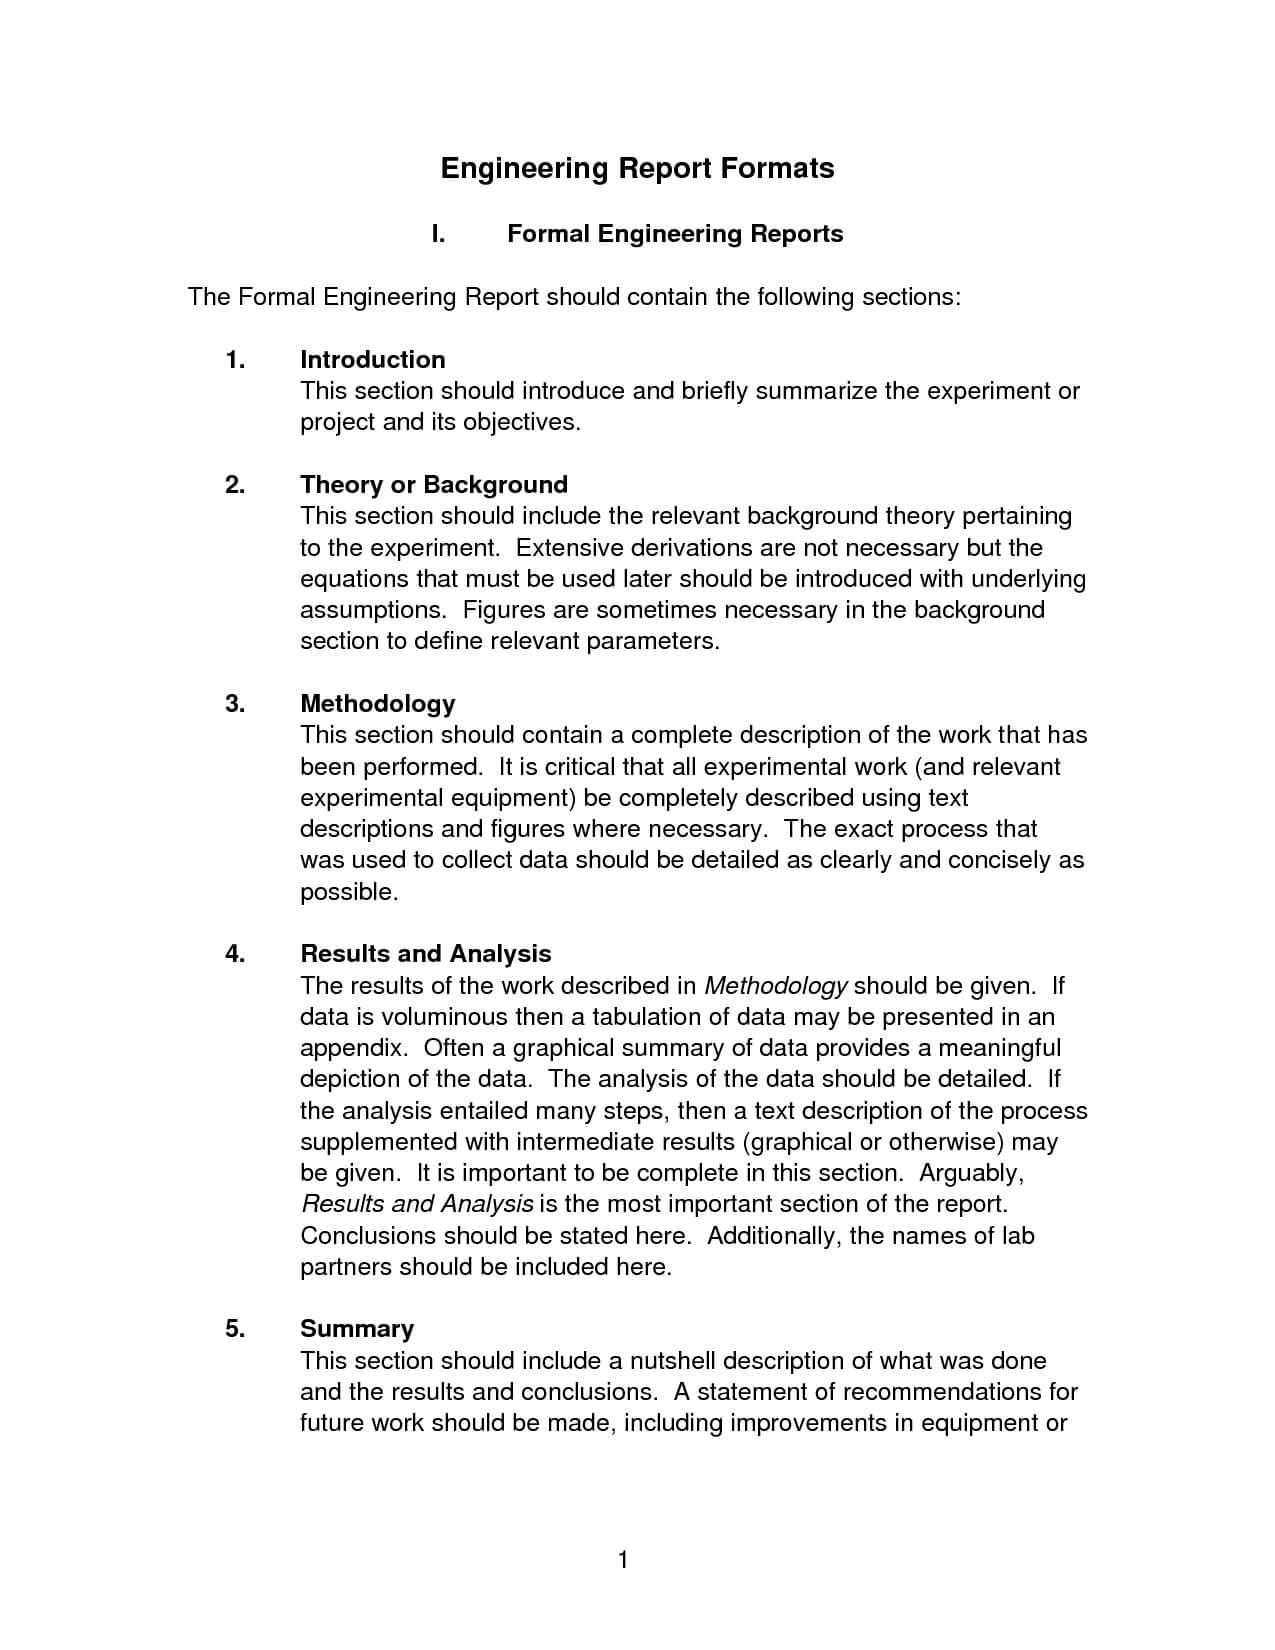 Engineering Report Template Project Progress Lab Example Pdf In Engineering Lab Report Template